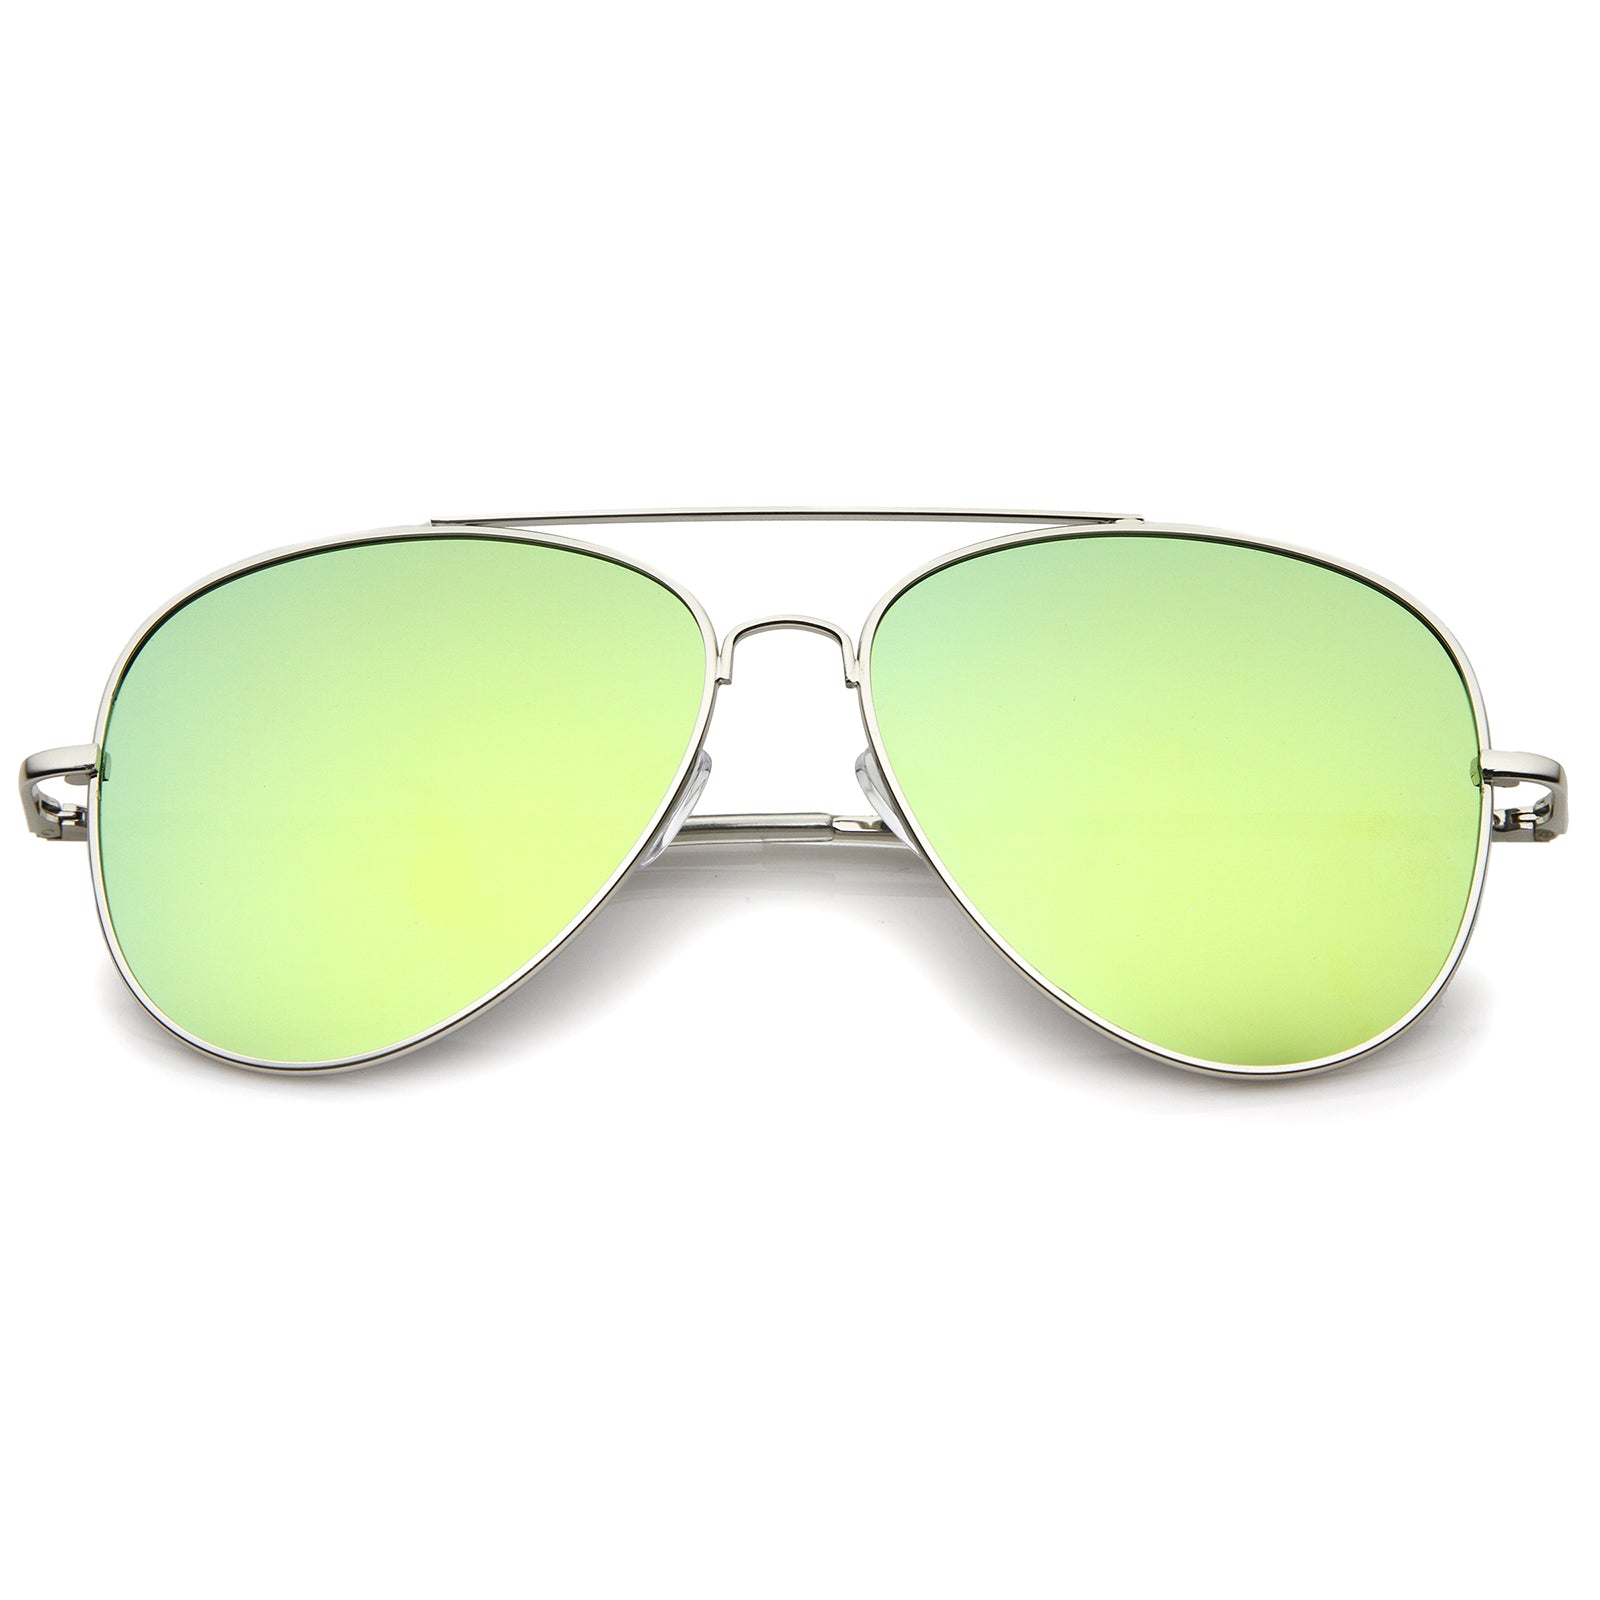 Premium Metal Cat Eye Sunglasses With Round Colored Mirror Flat